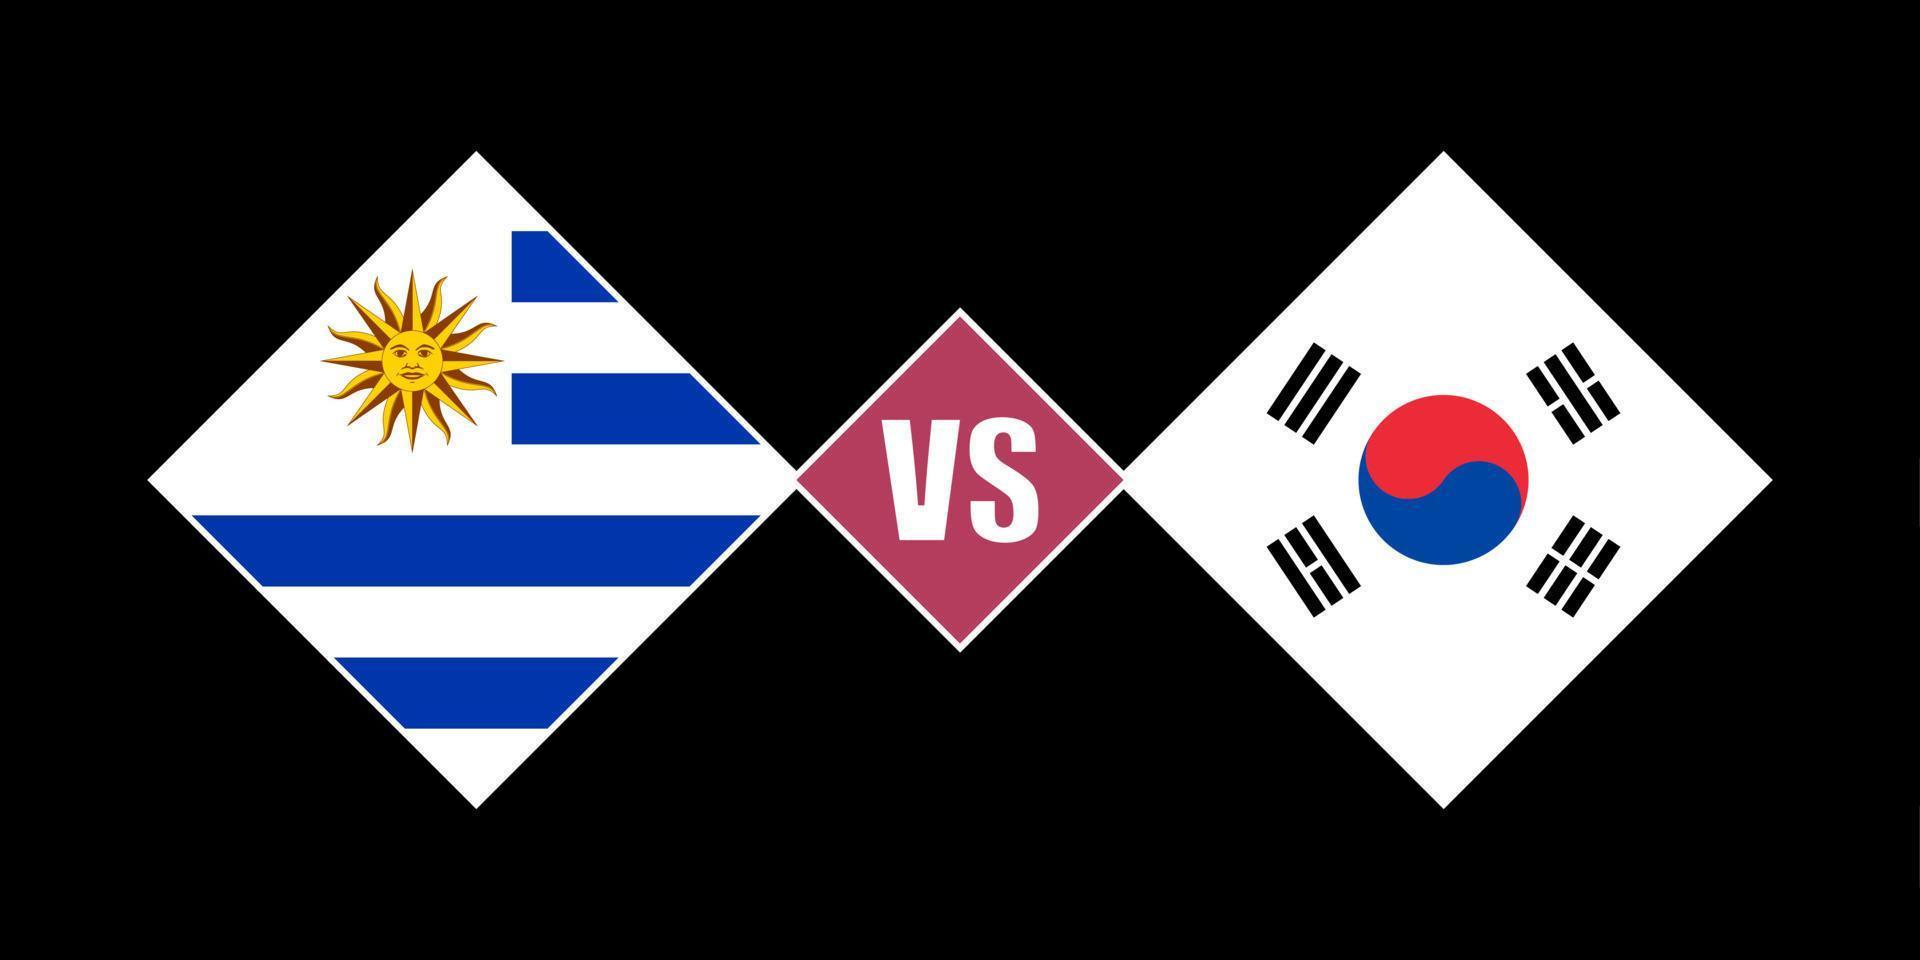 Uruguay vs South Korea flag concept. Vector illustration.